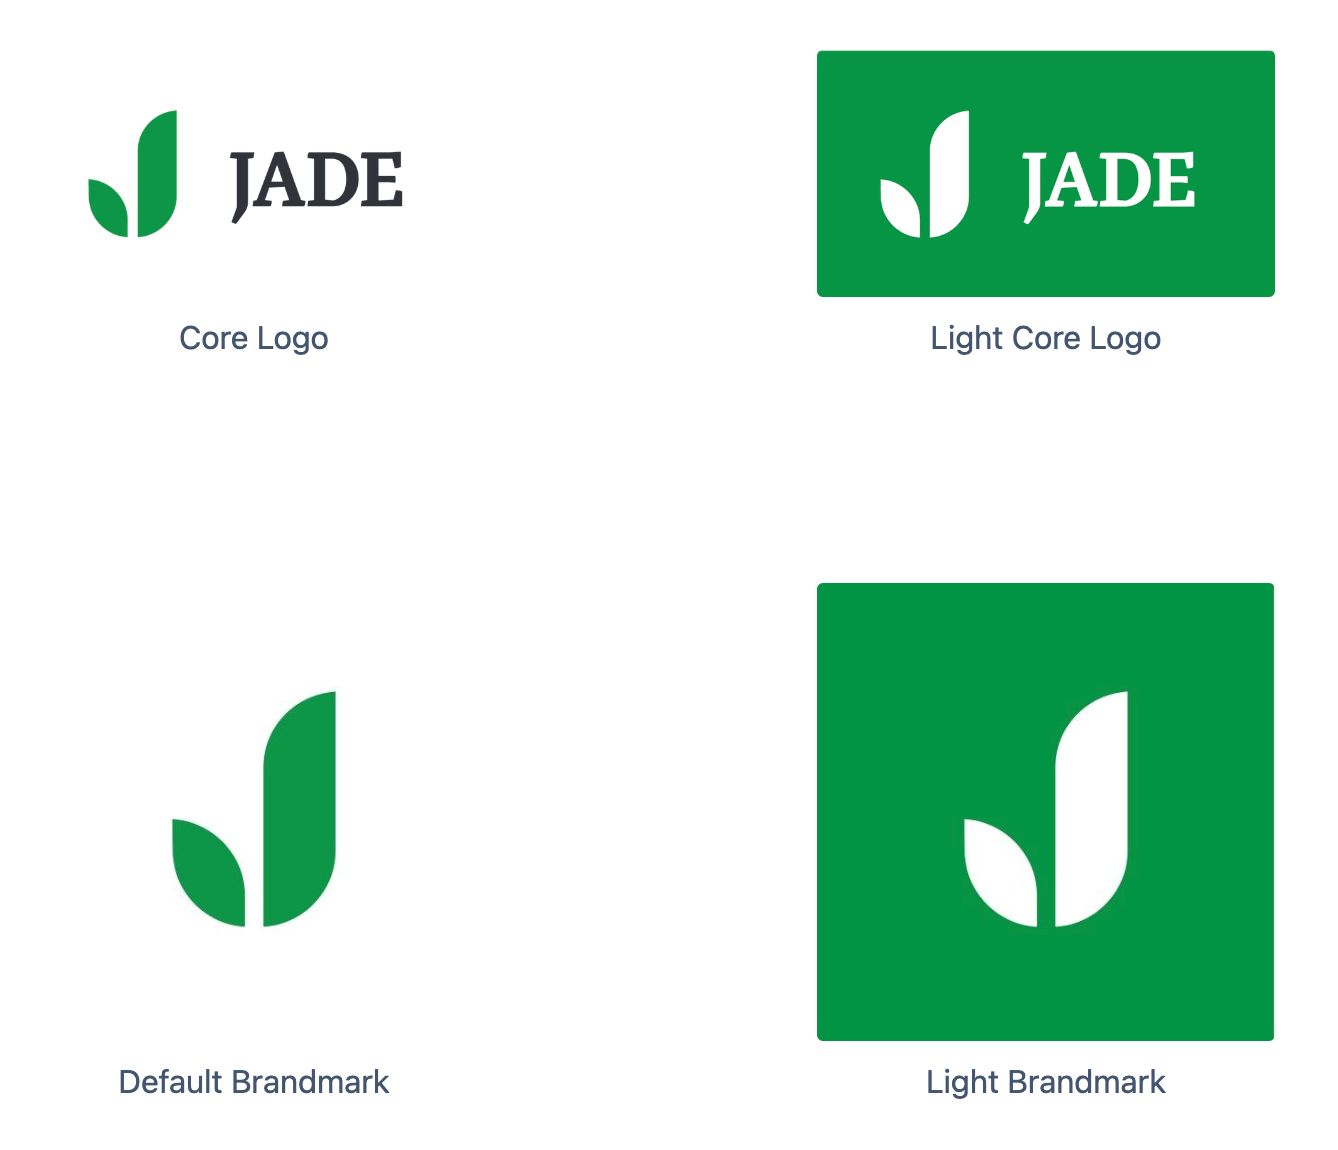 Logomark and brandmark versions of the new JADE logo